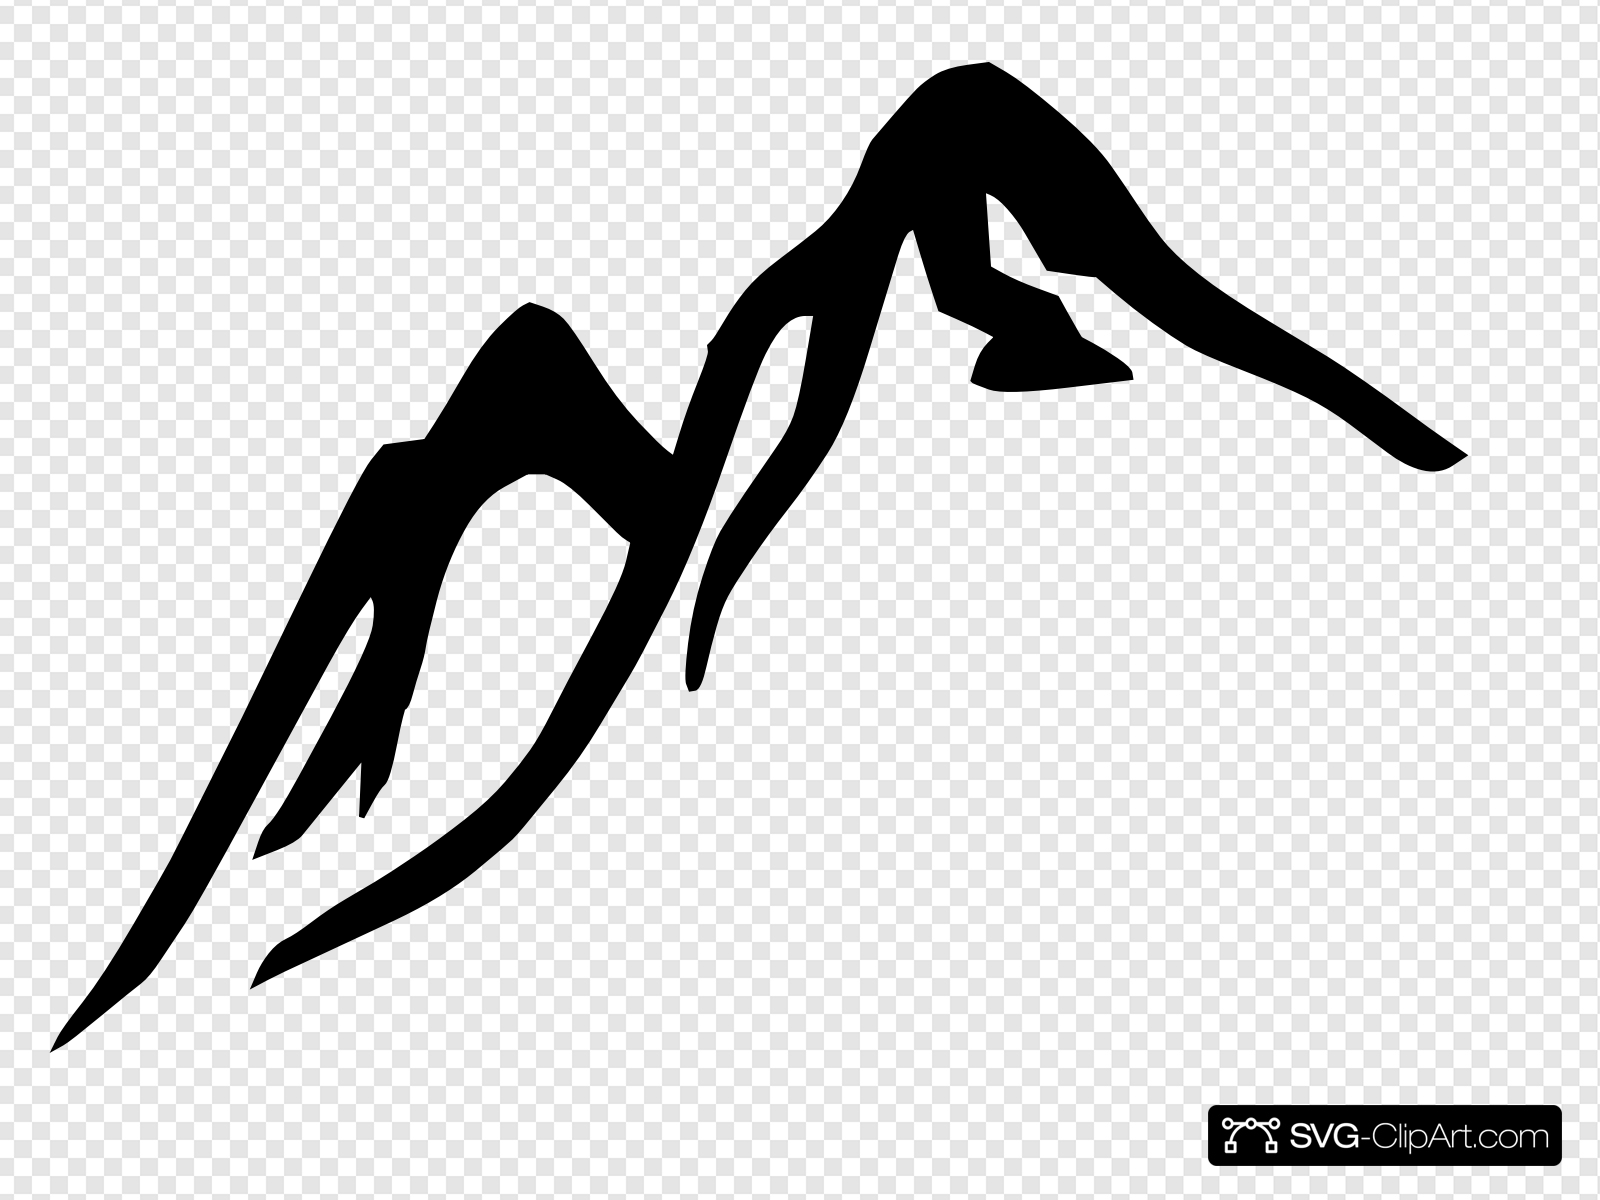 Black+white Mountain Clip art, Icon and SVG.